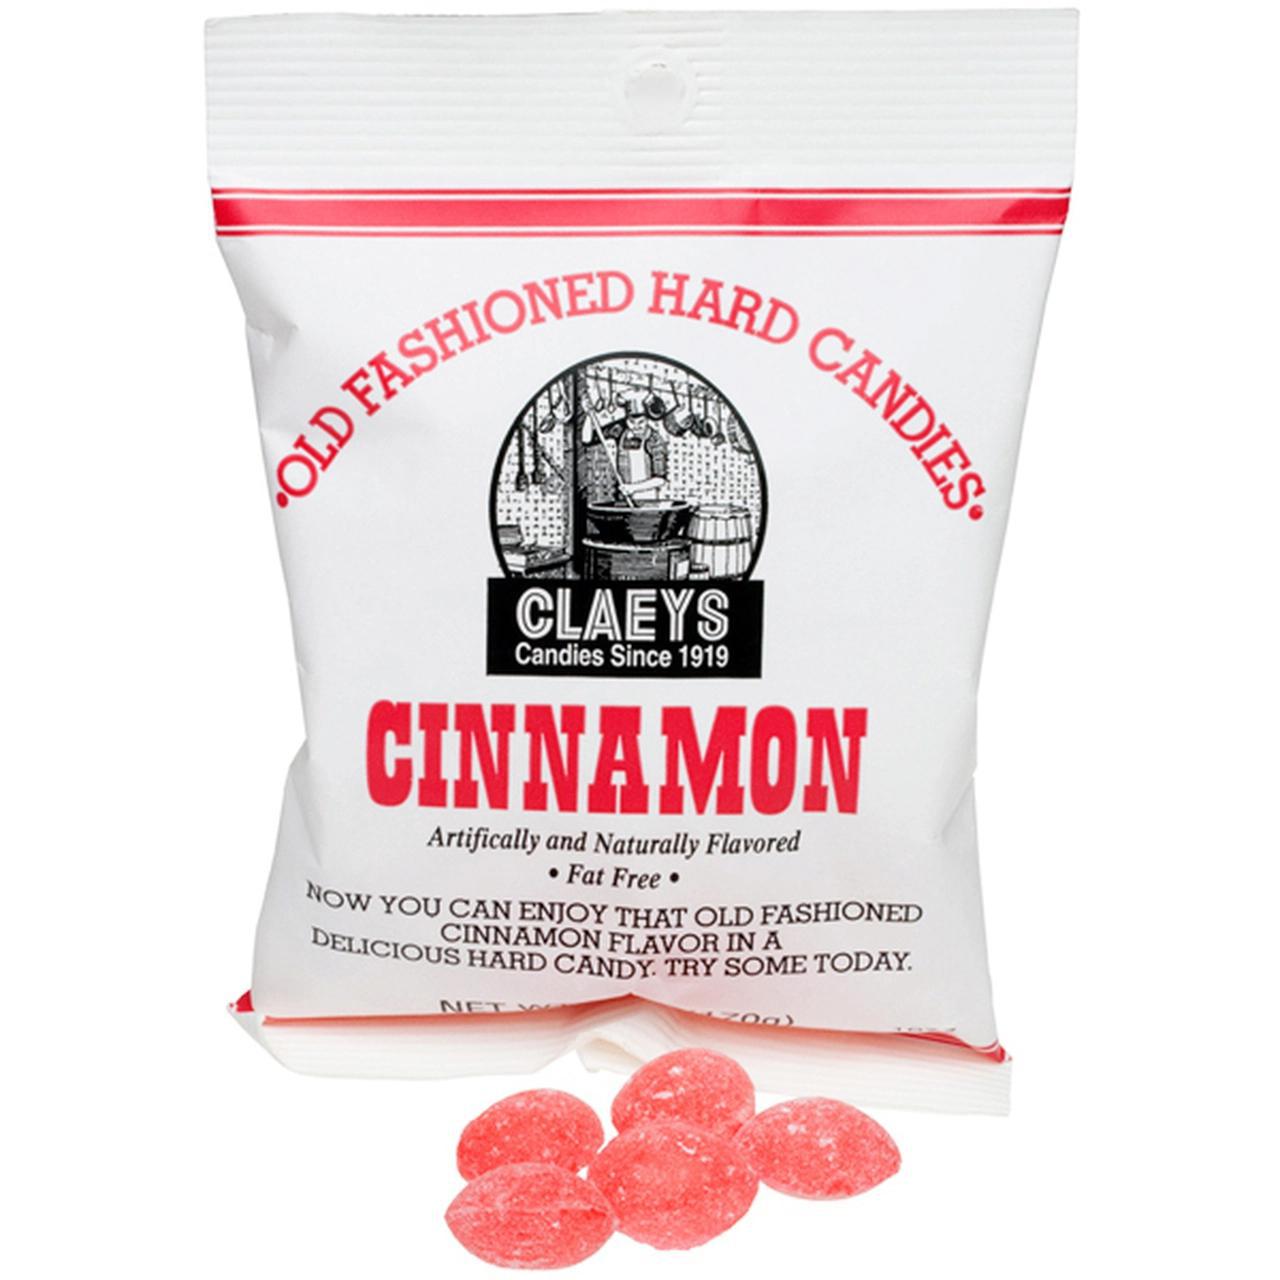 Claey's Old Fashioned Hard Candy | Cinnamon